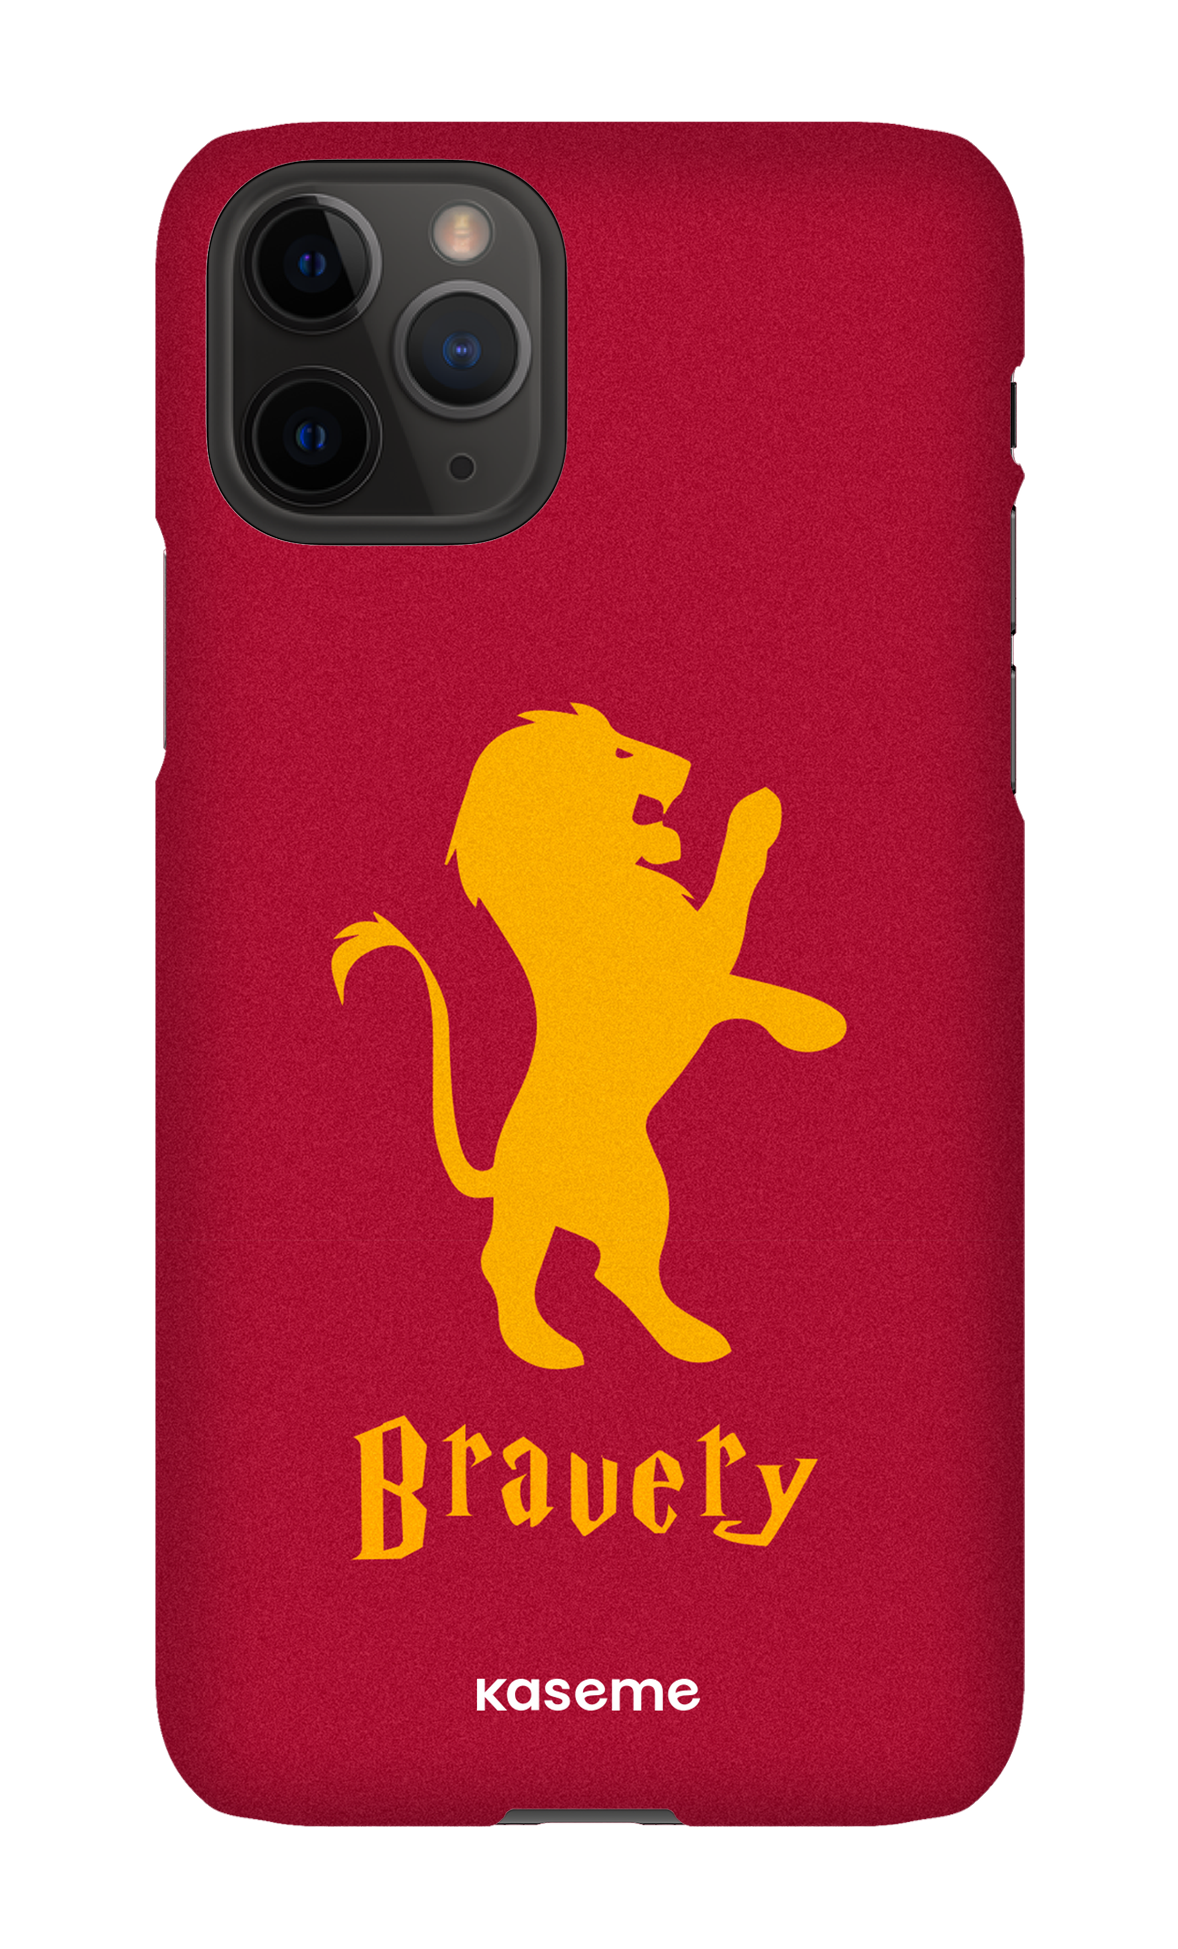 Bravery - iPhone 11 Pro